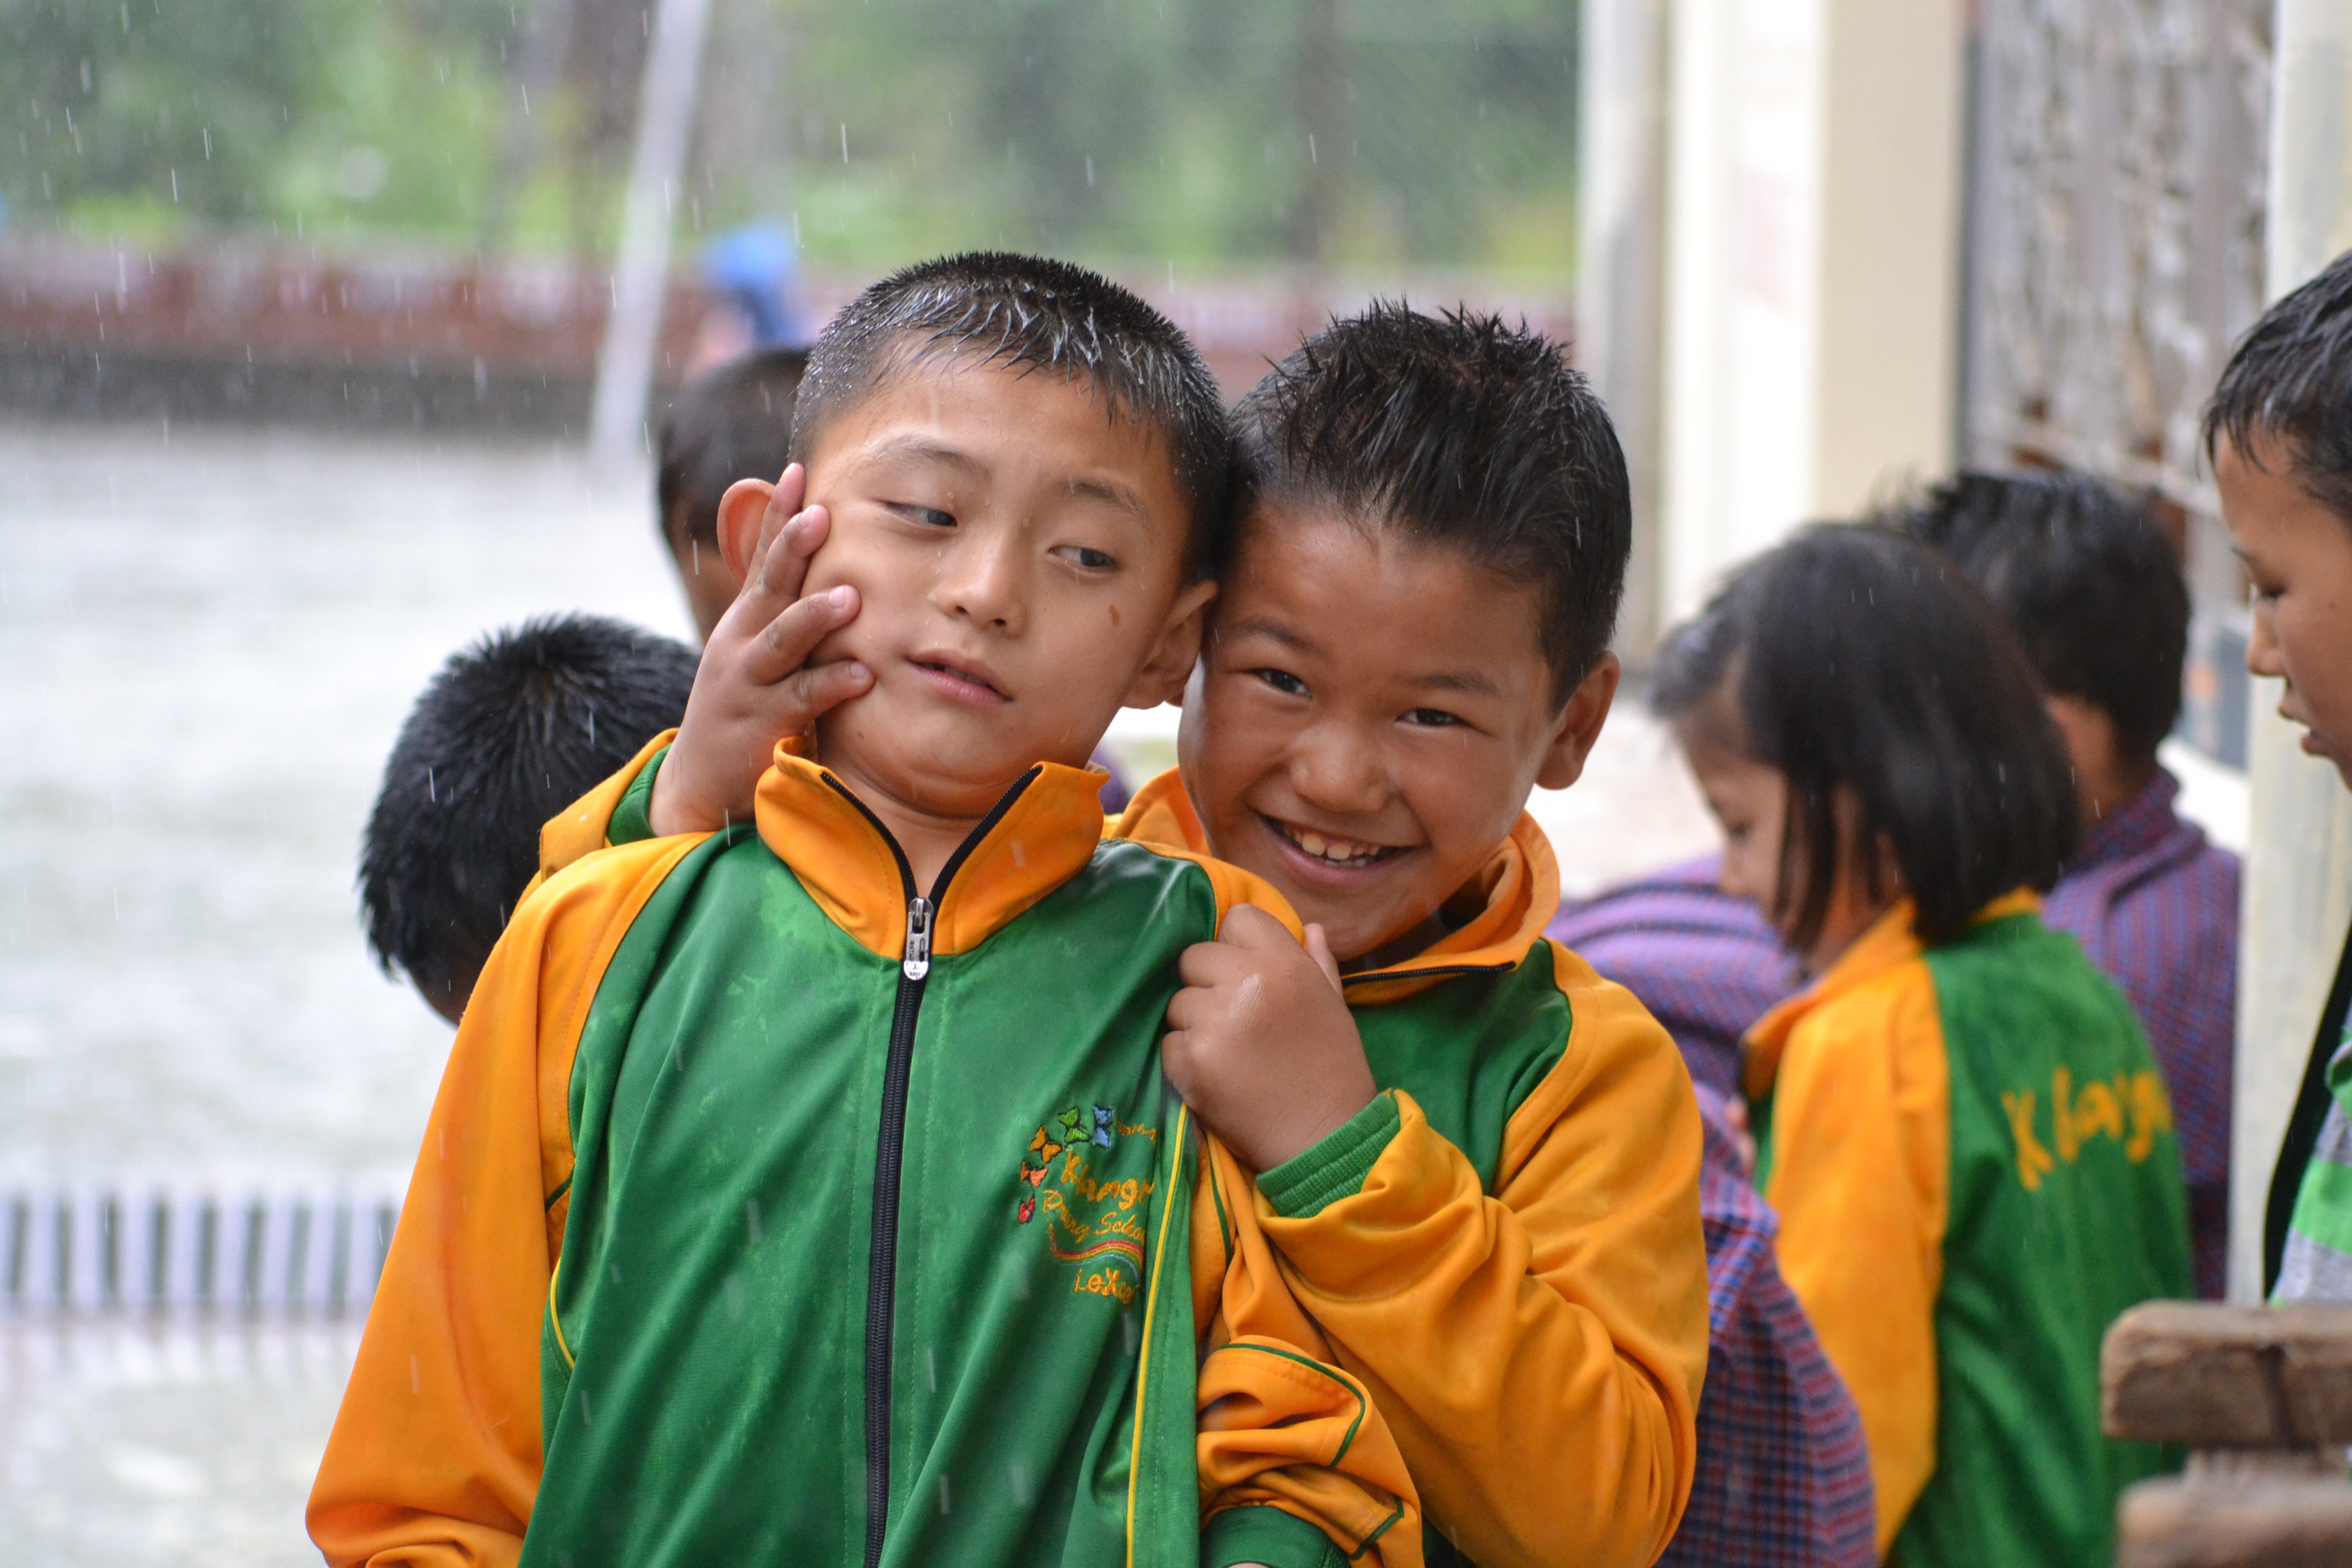 Boys playing in school in Bhutan